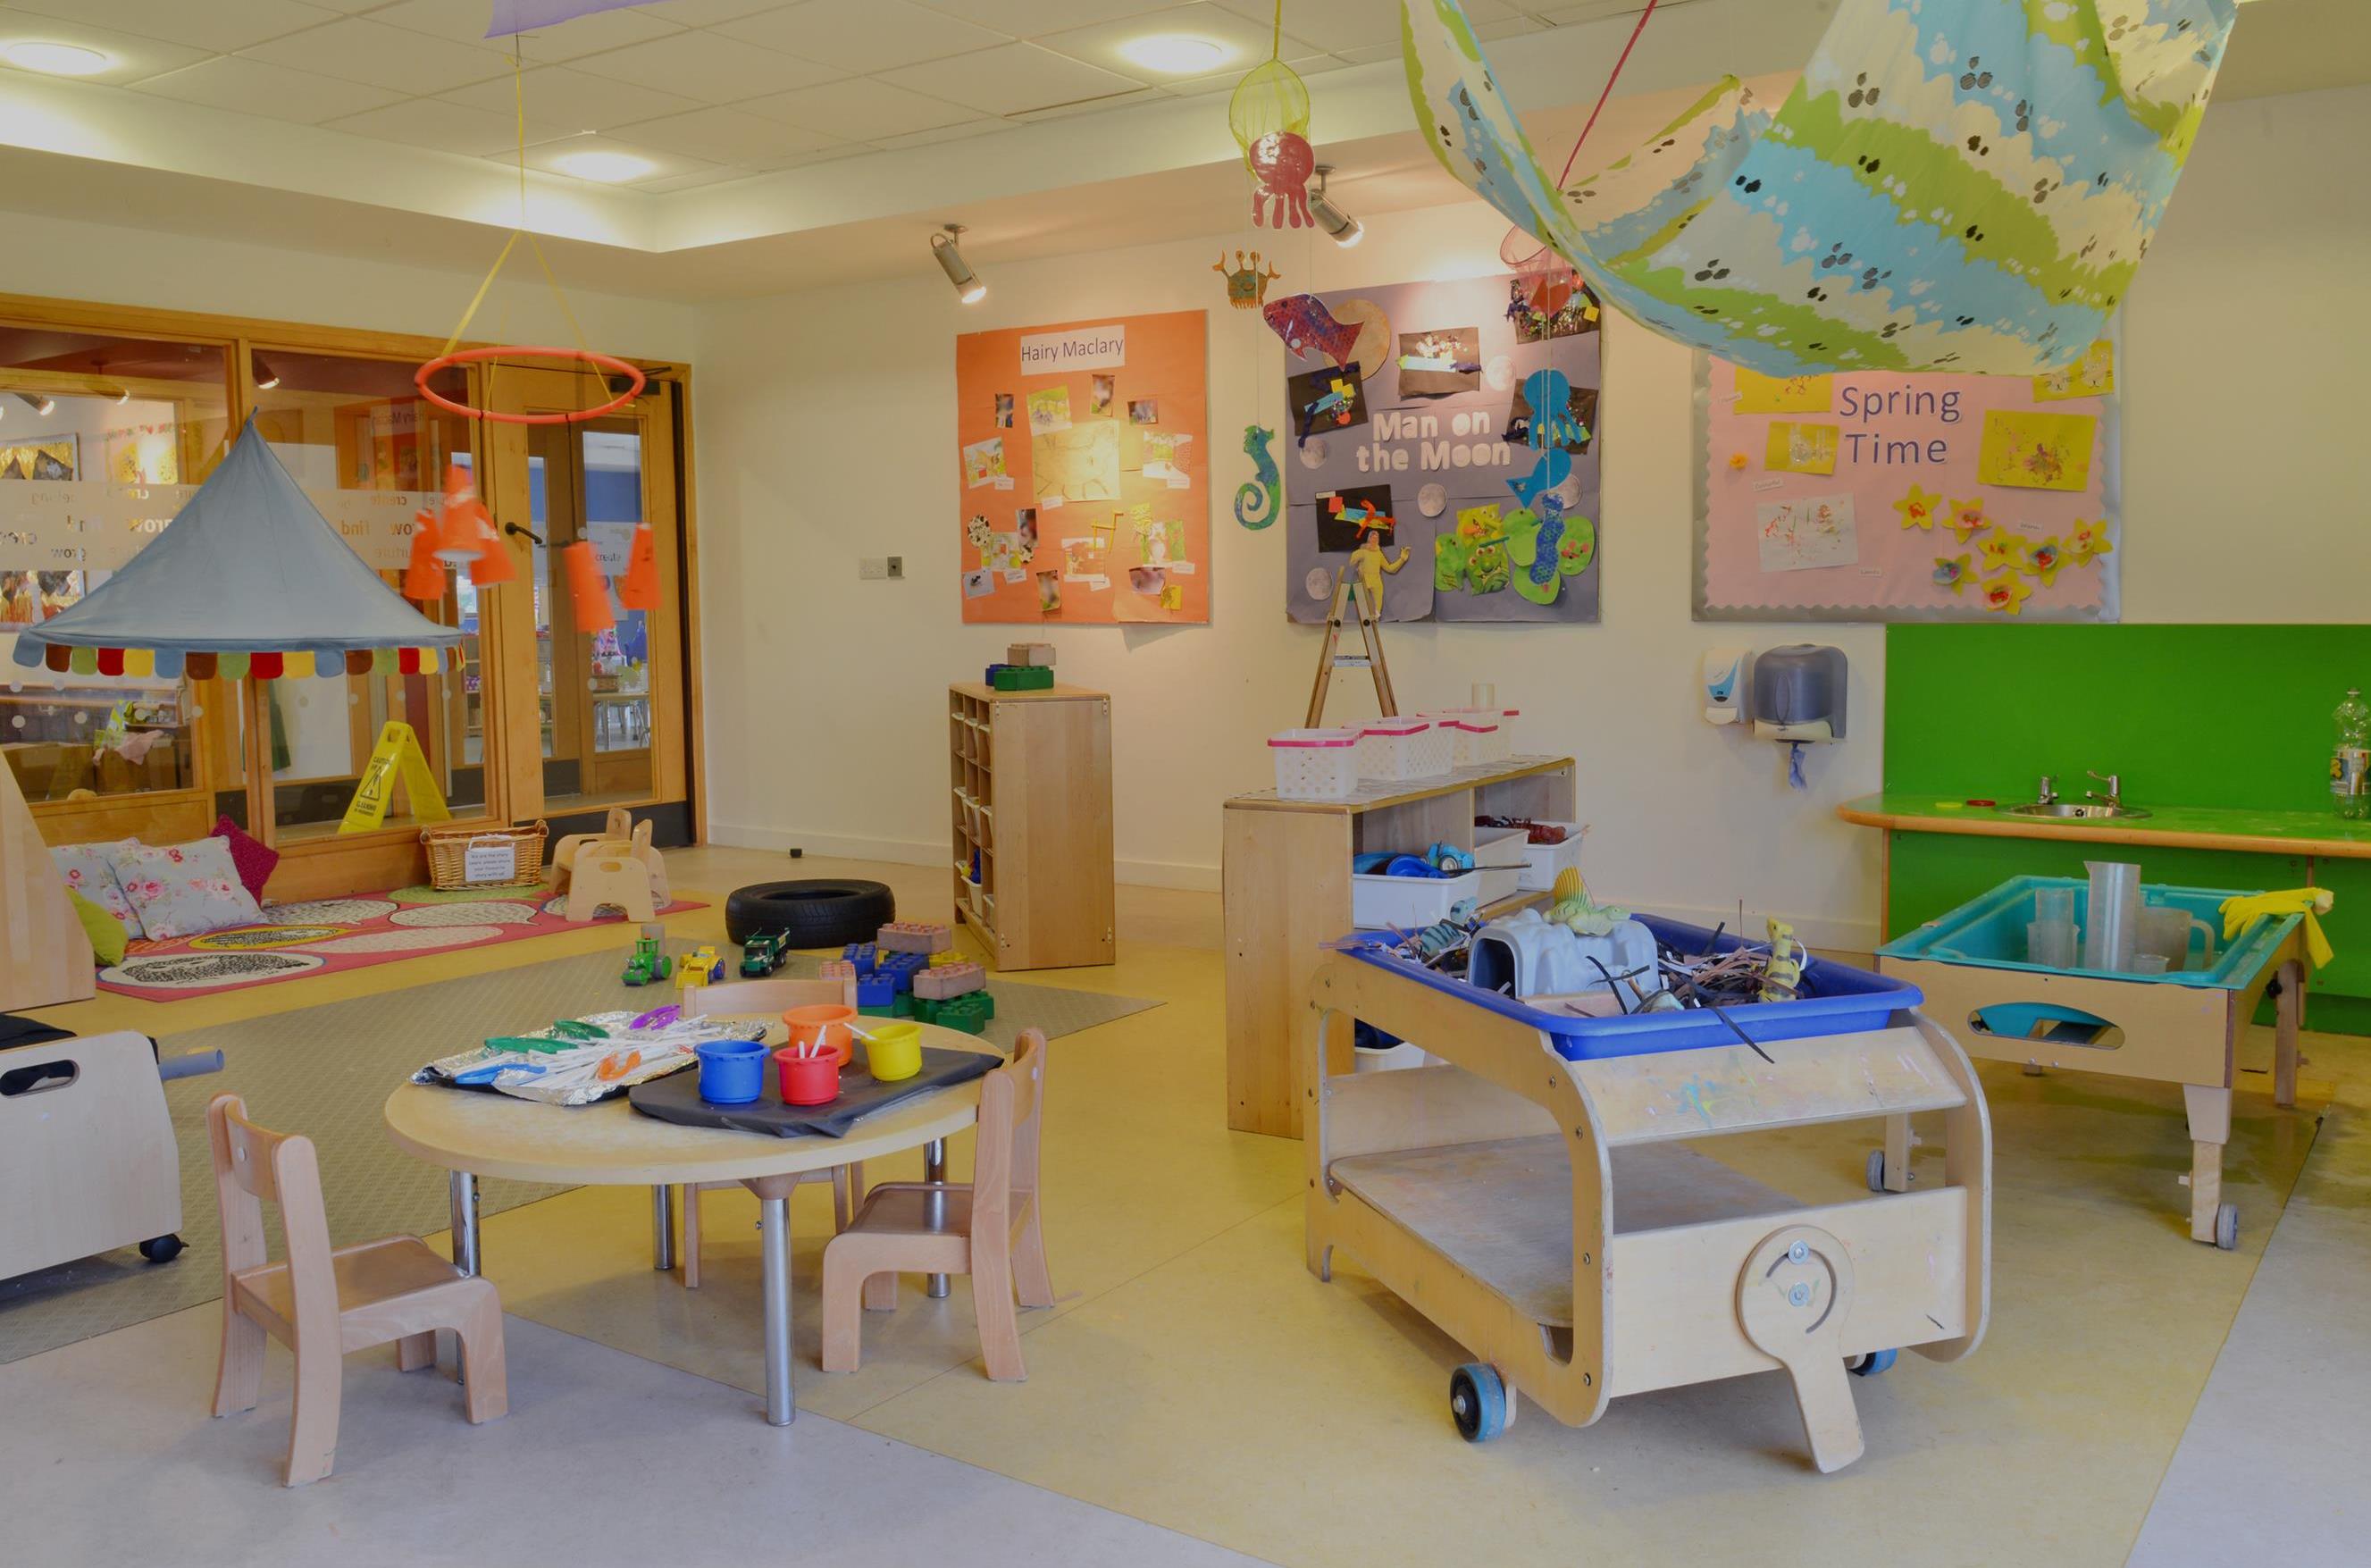 Bright Horizons Tytherington Day Nursery and Preschool Macclesfield 03300 575682